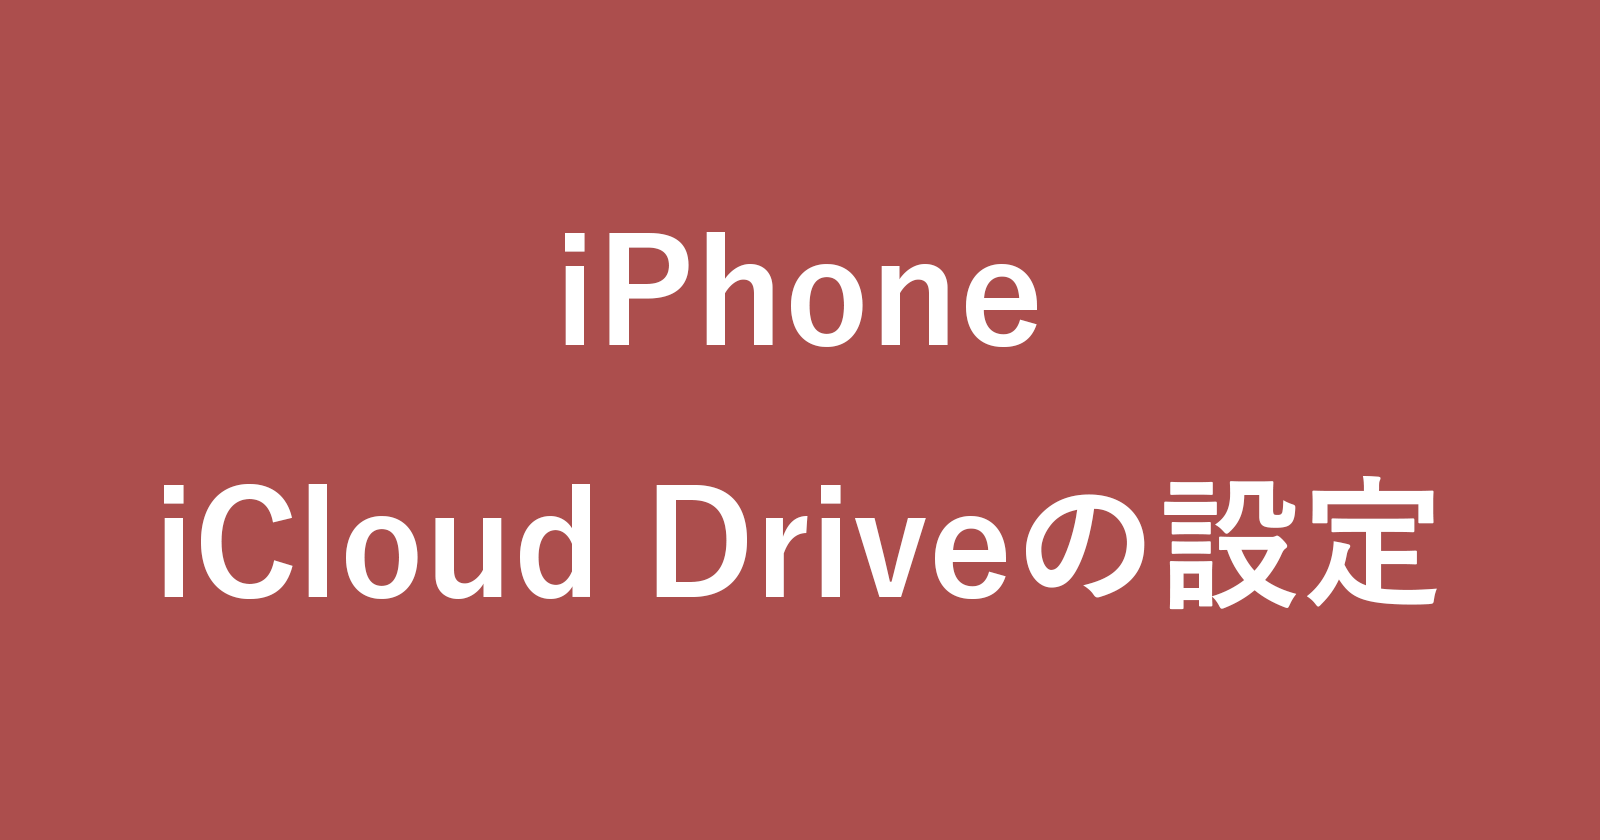 iphone icloud drive